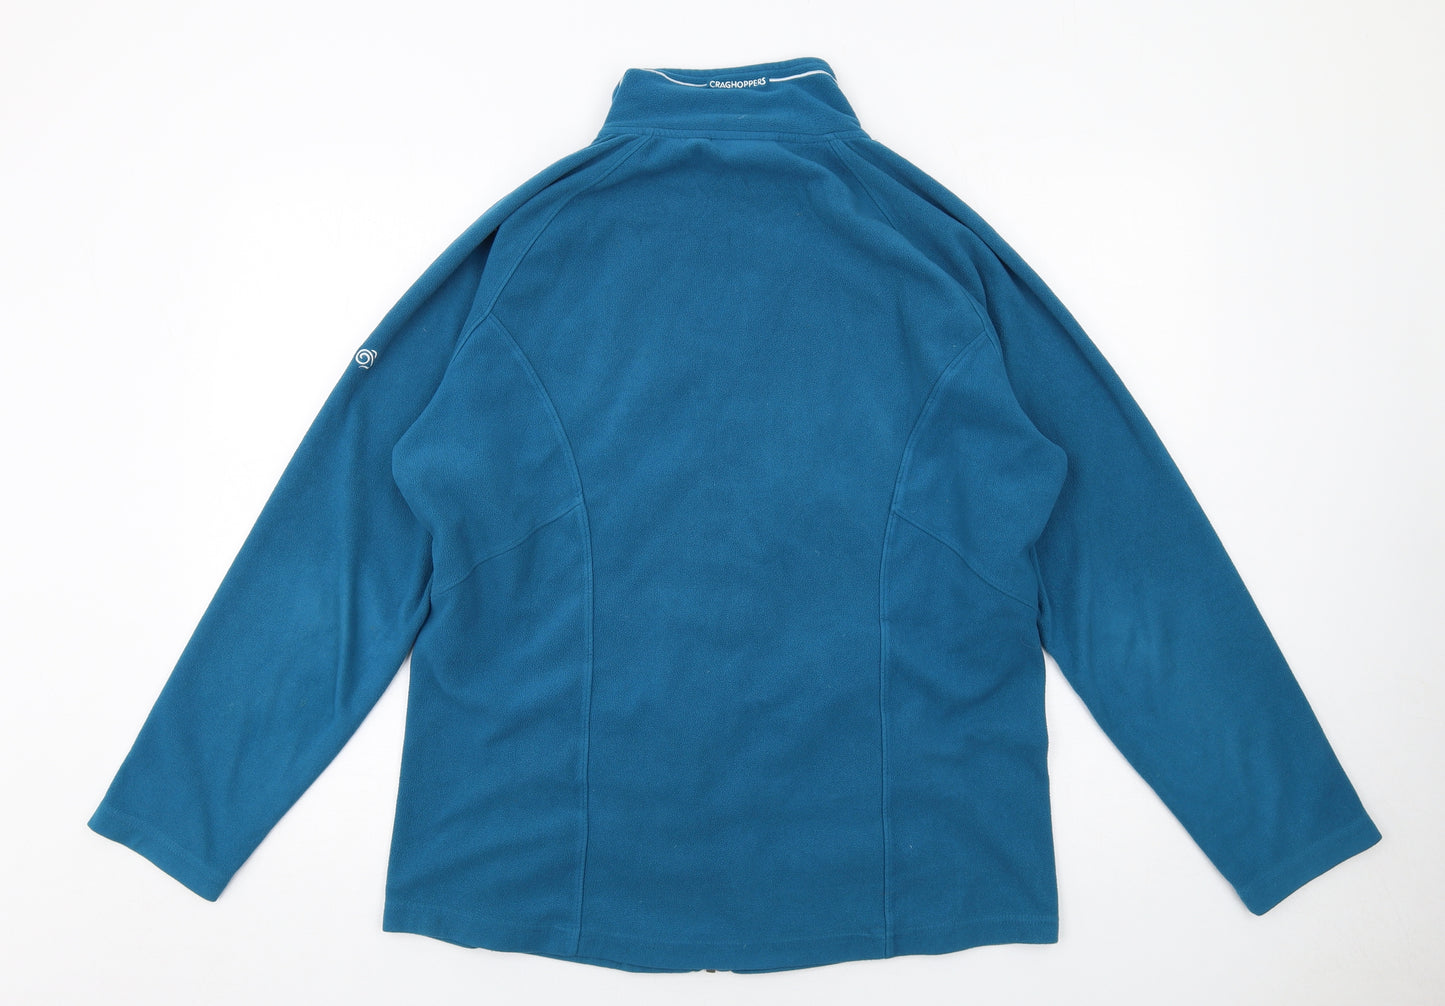 Craghoppers Womens Blue Jacket Size 16 Zip